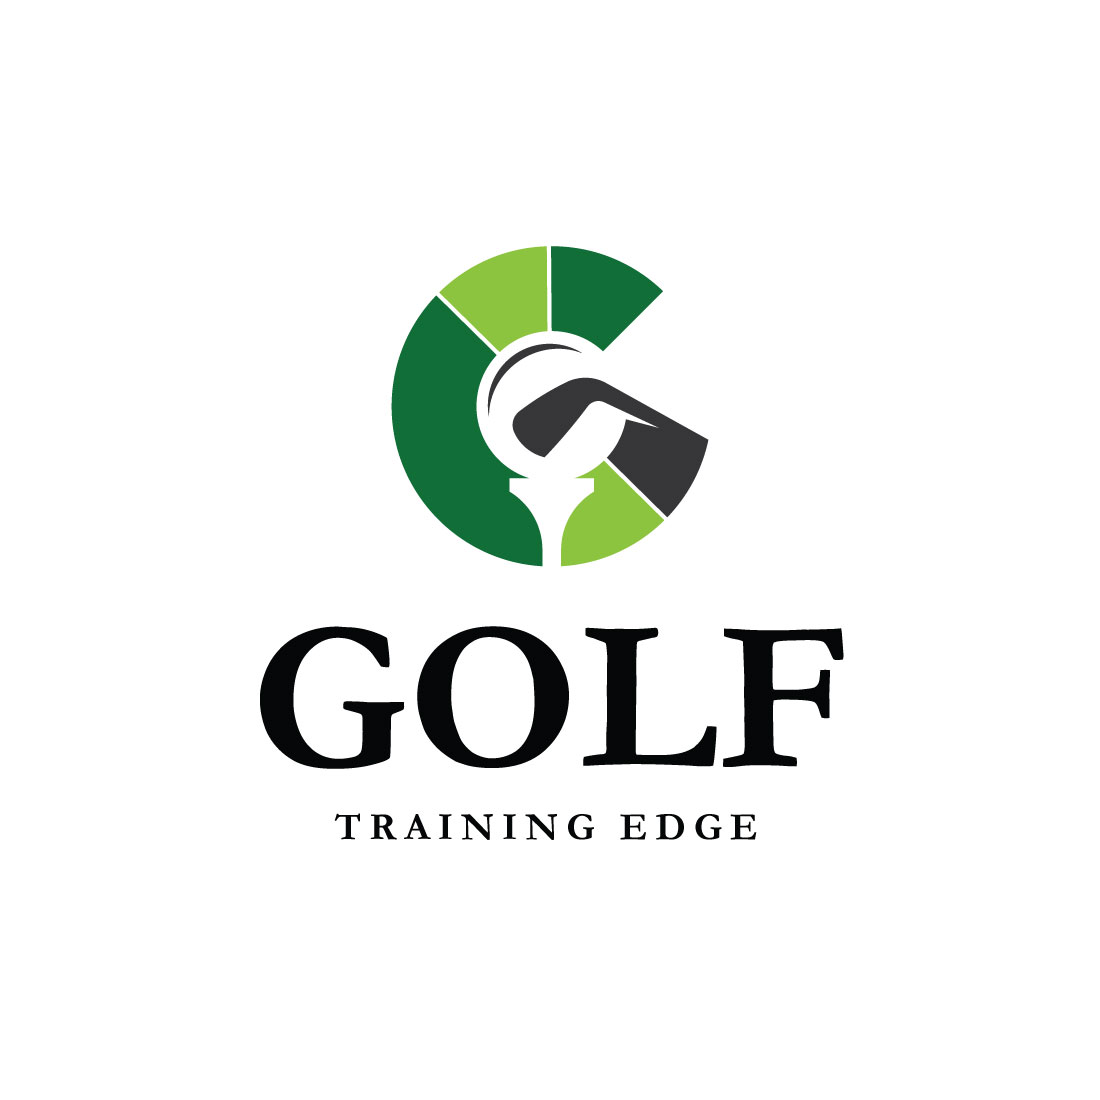 Golf Logo - Letter G preview image.